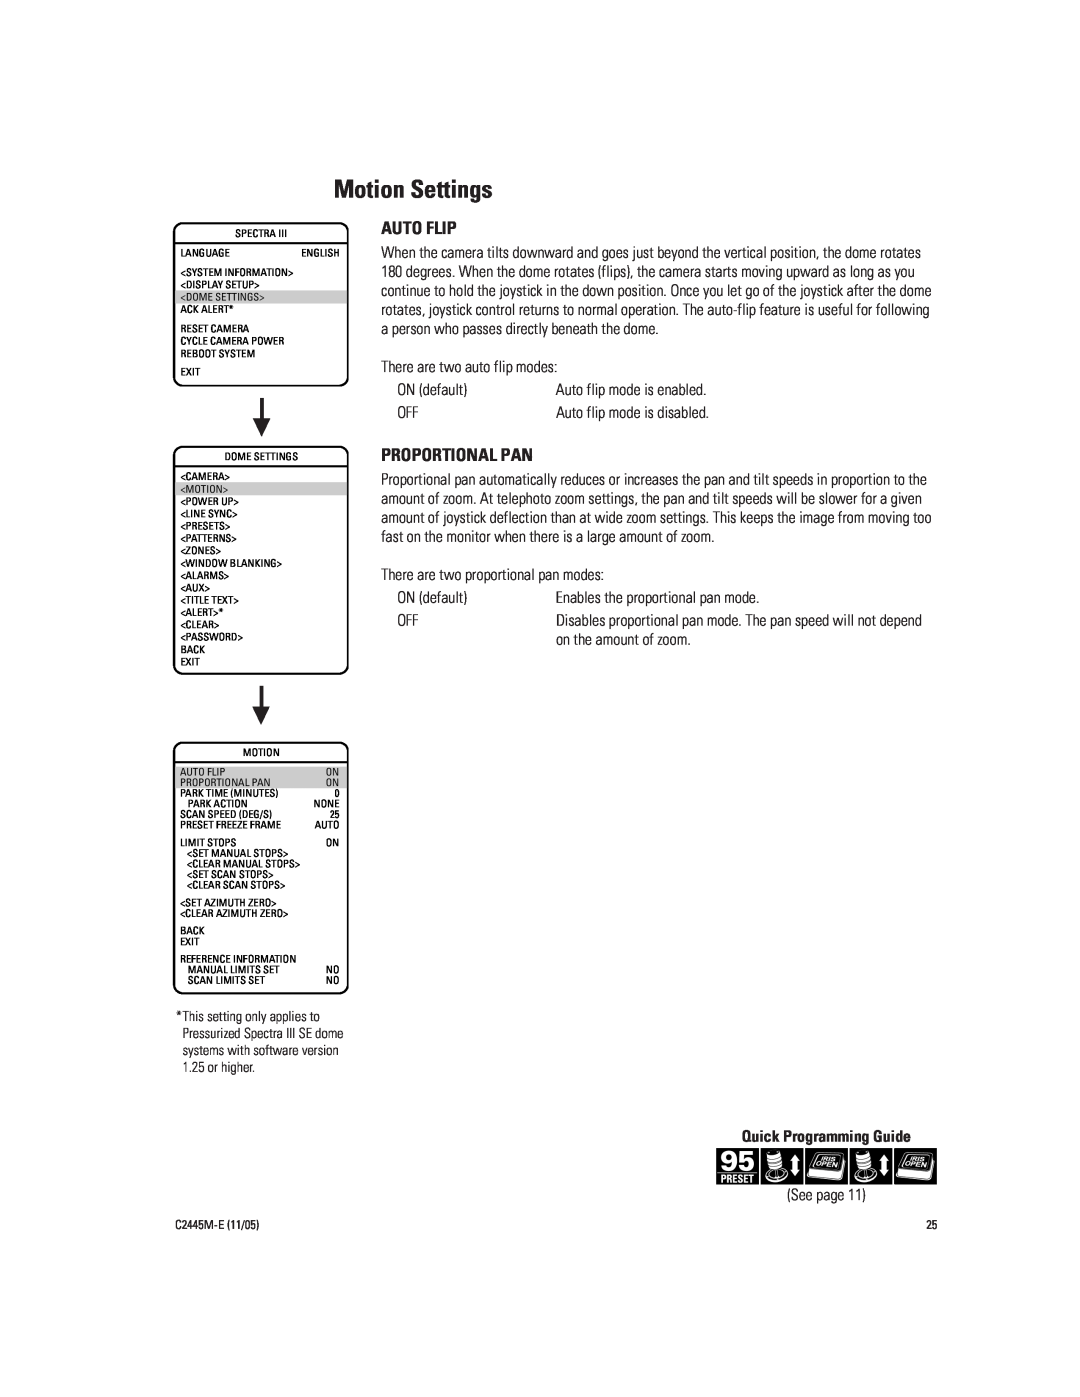 Pelco DD53CBW-X manual Motion Settings, Auto Flip, Proportional Pan, Quick Programming Guide 